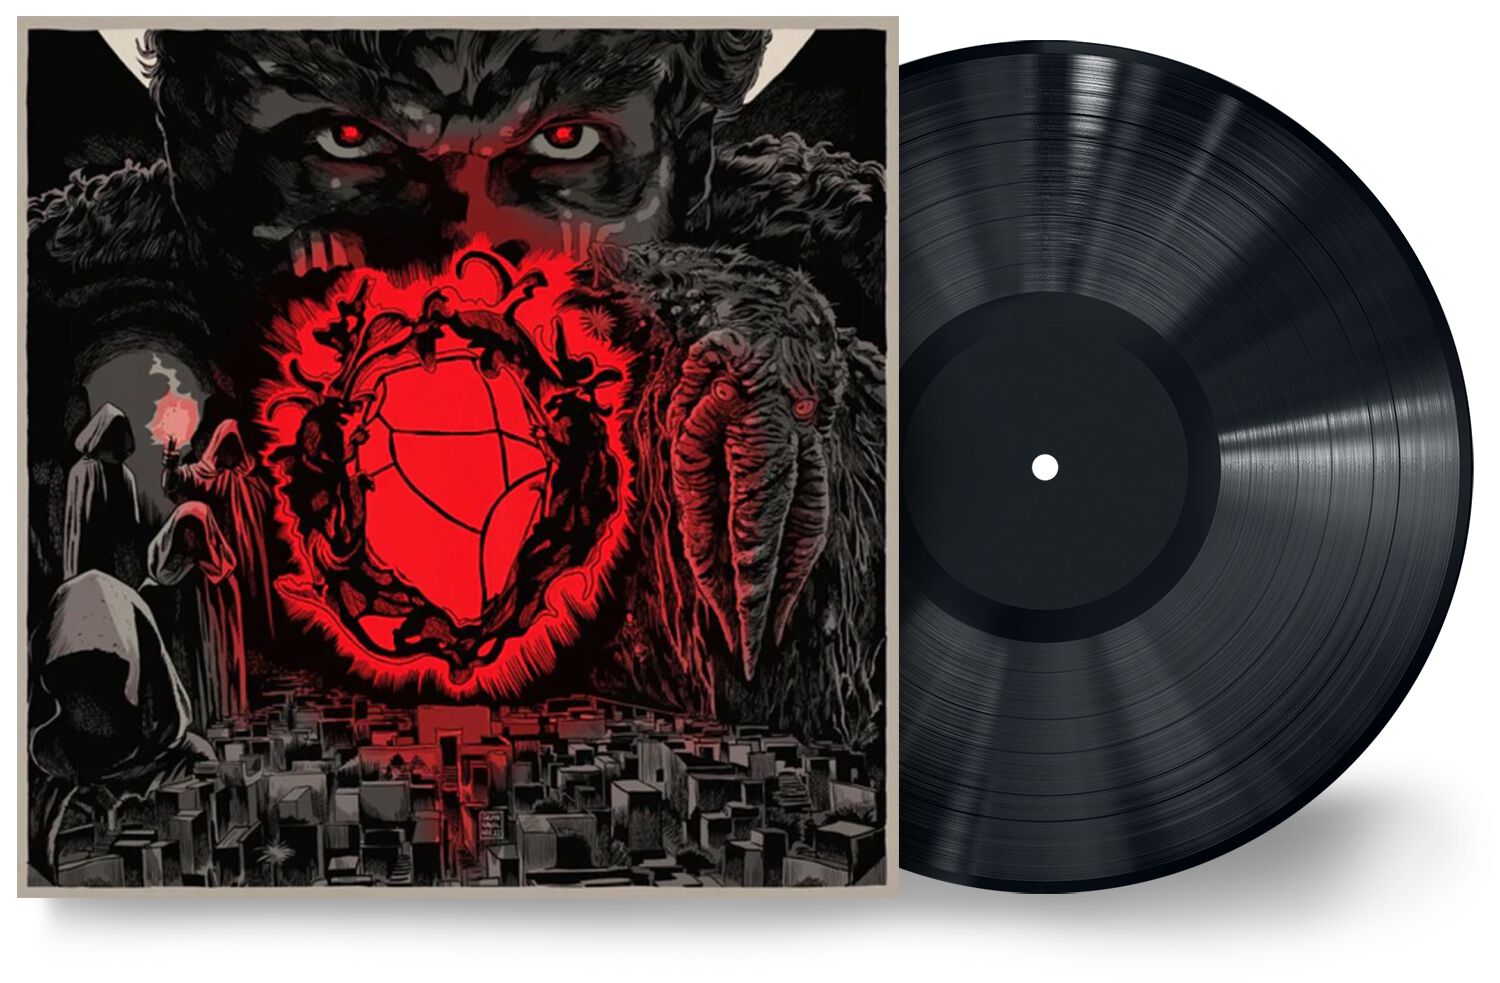 Marvel's Werewolf By Night - Original Motion Picture Soundtrack LP